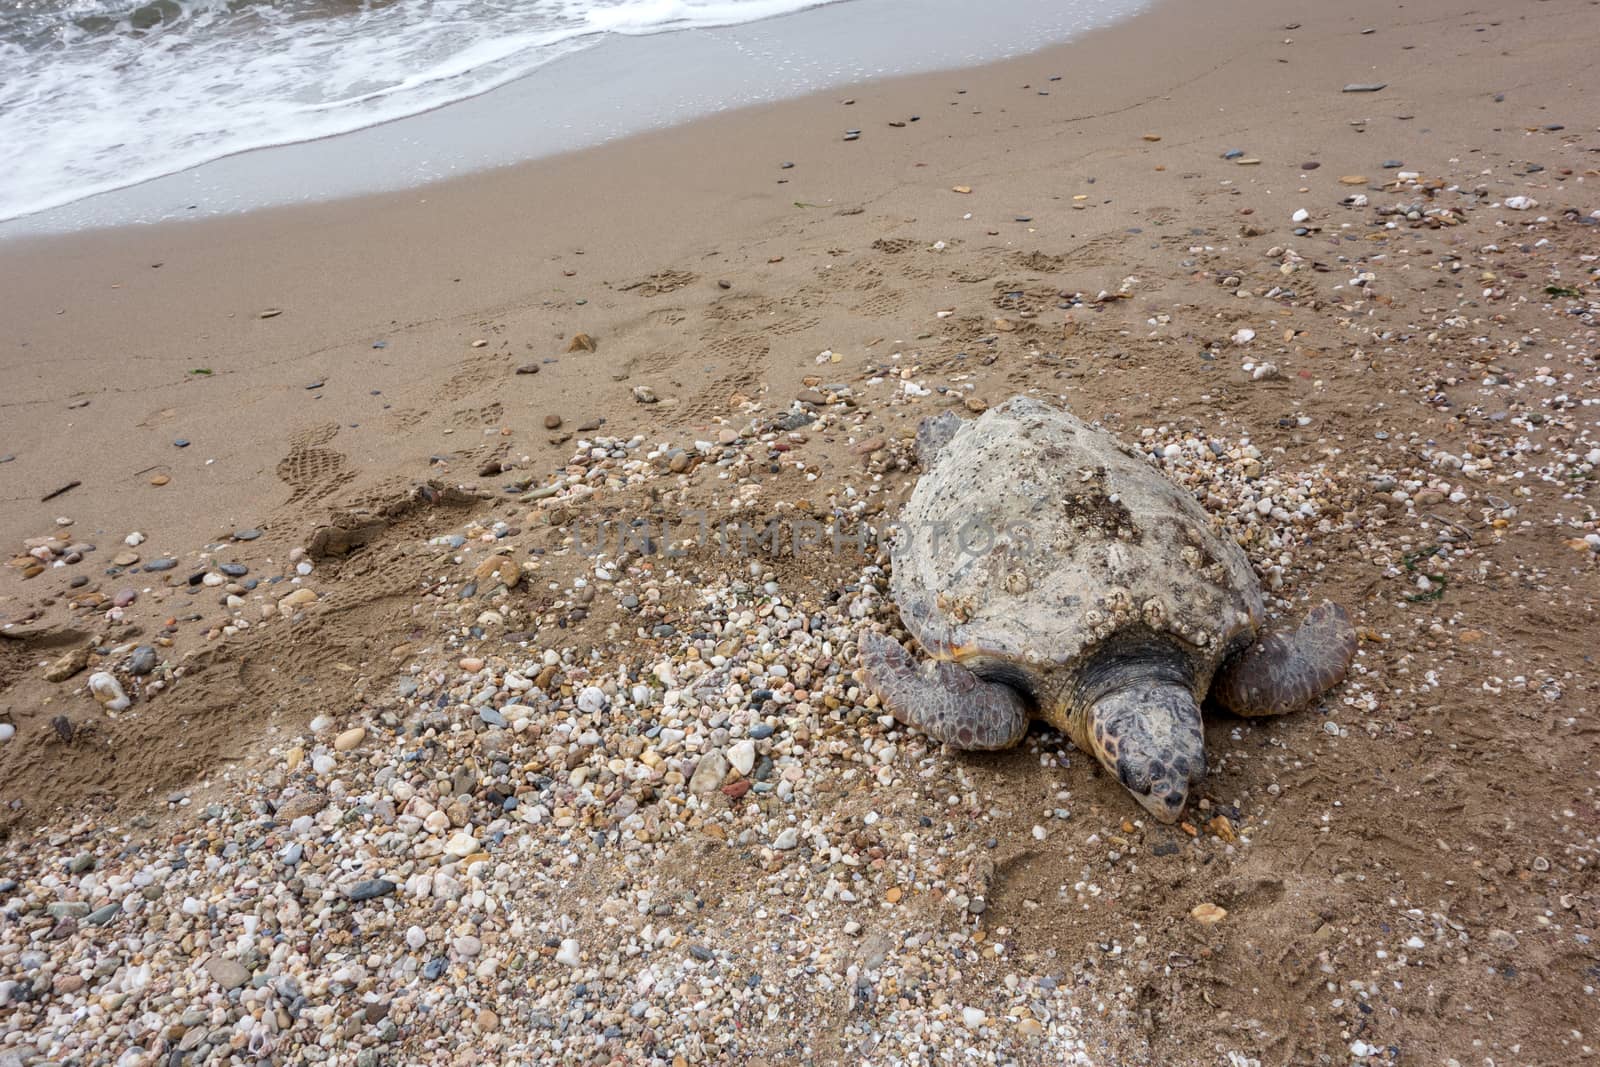 Dead sea turtle by Portokalis